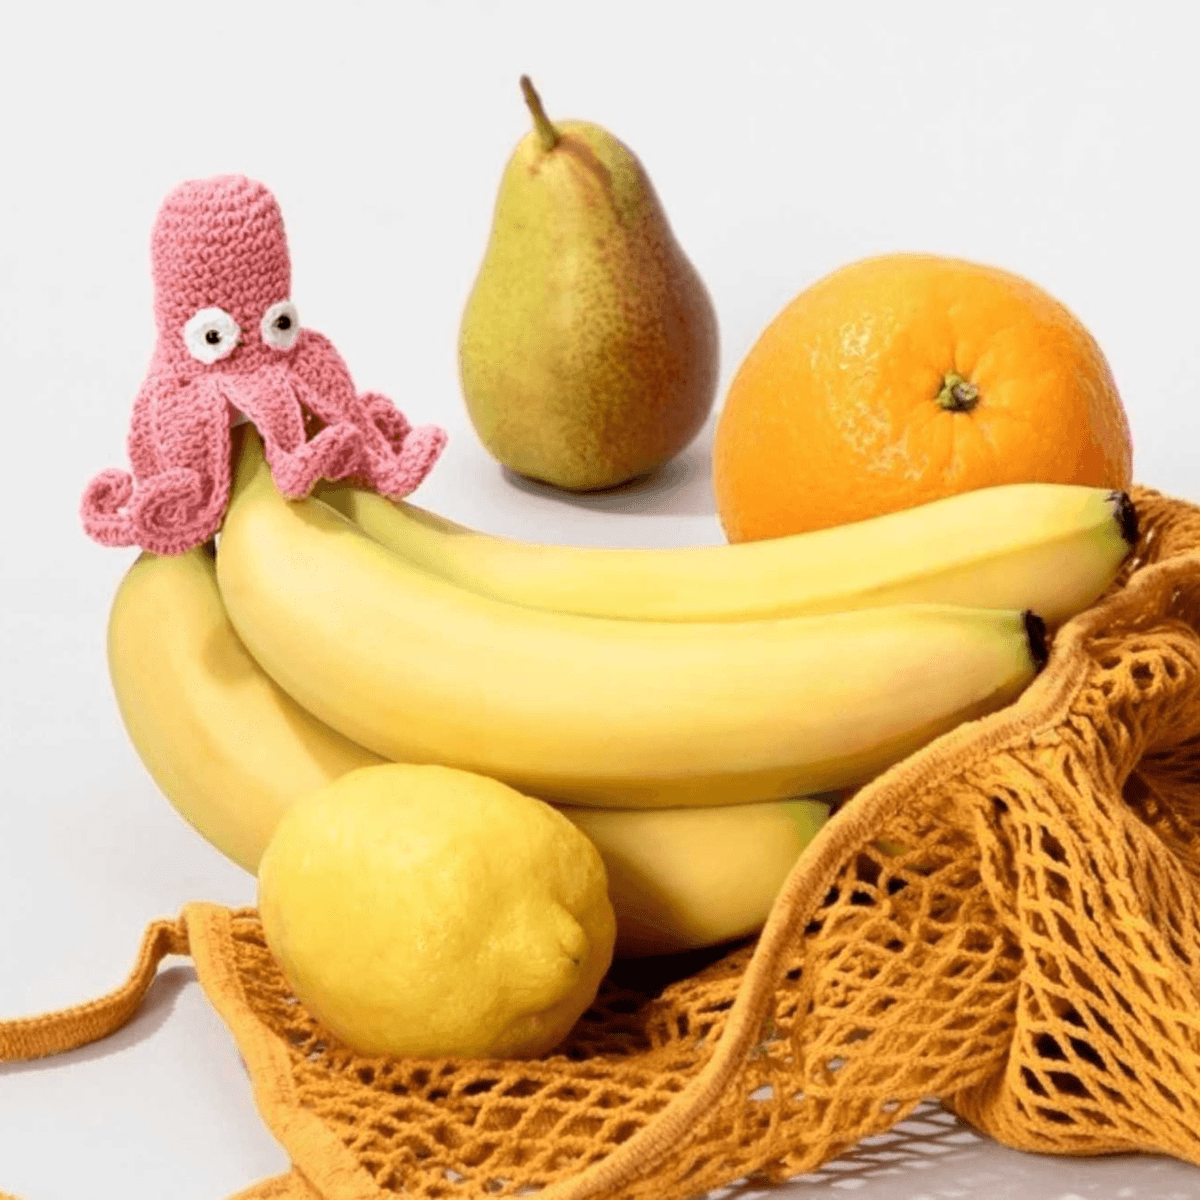 The Nana Hats Banana Preserver Keeps Bananas Fresher for Longer